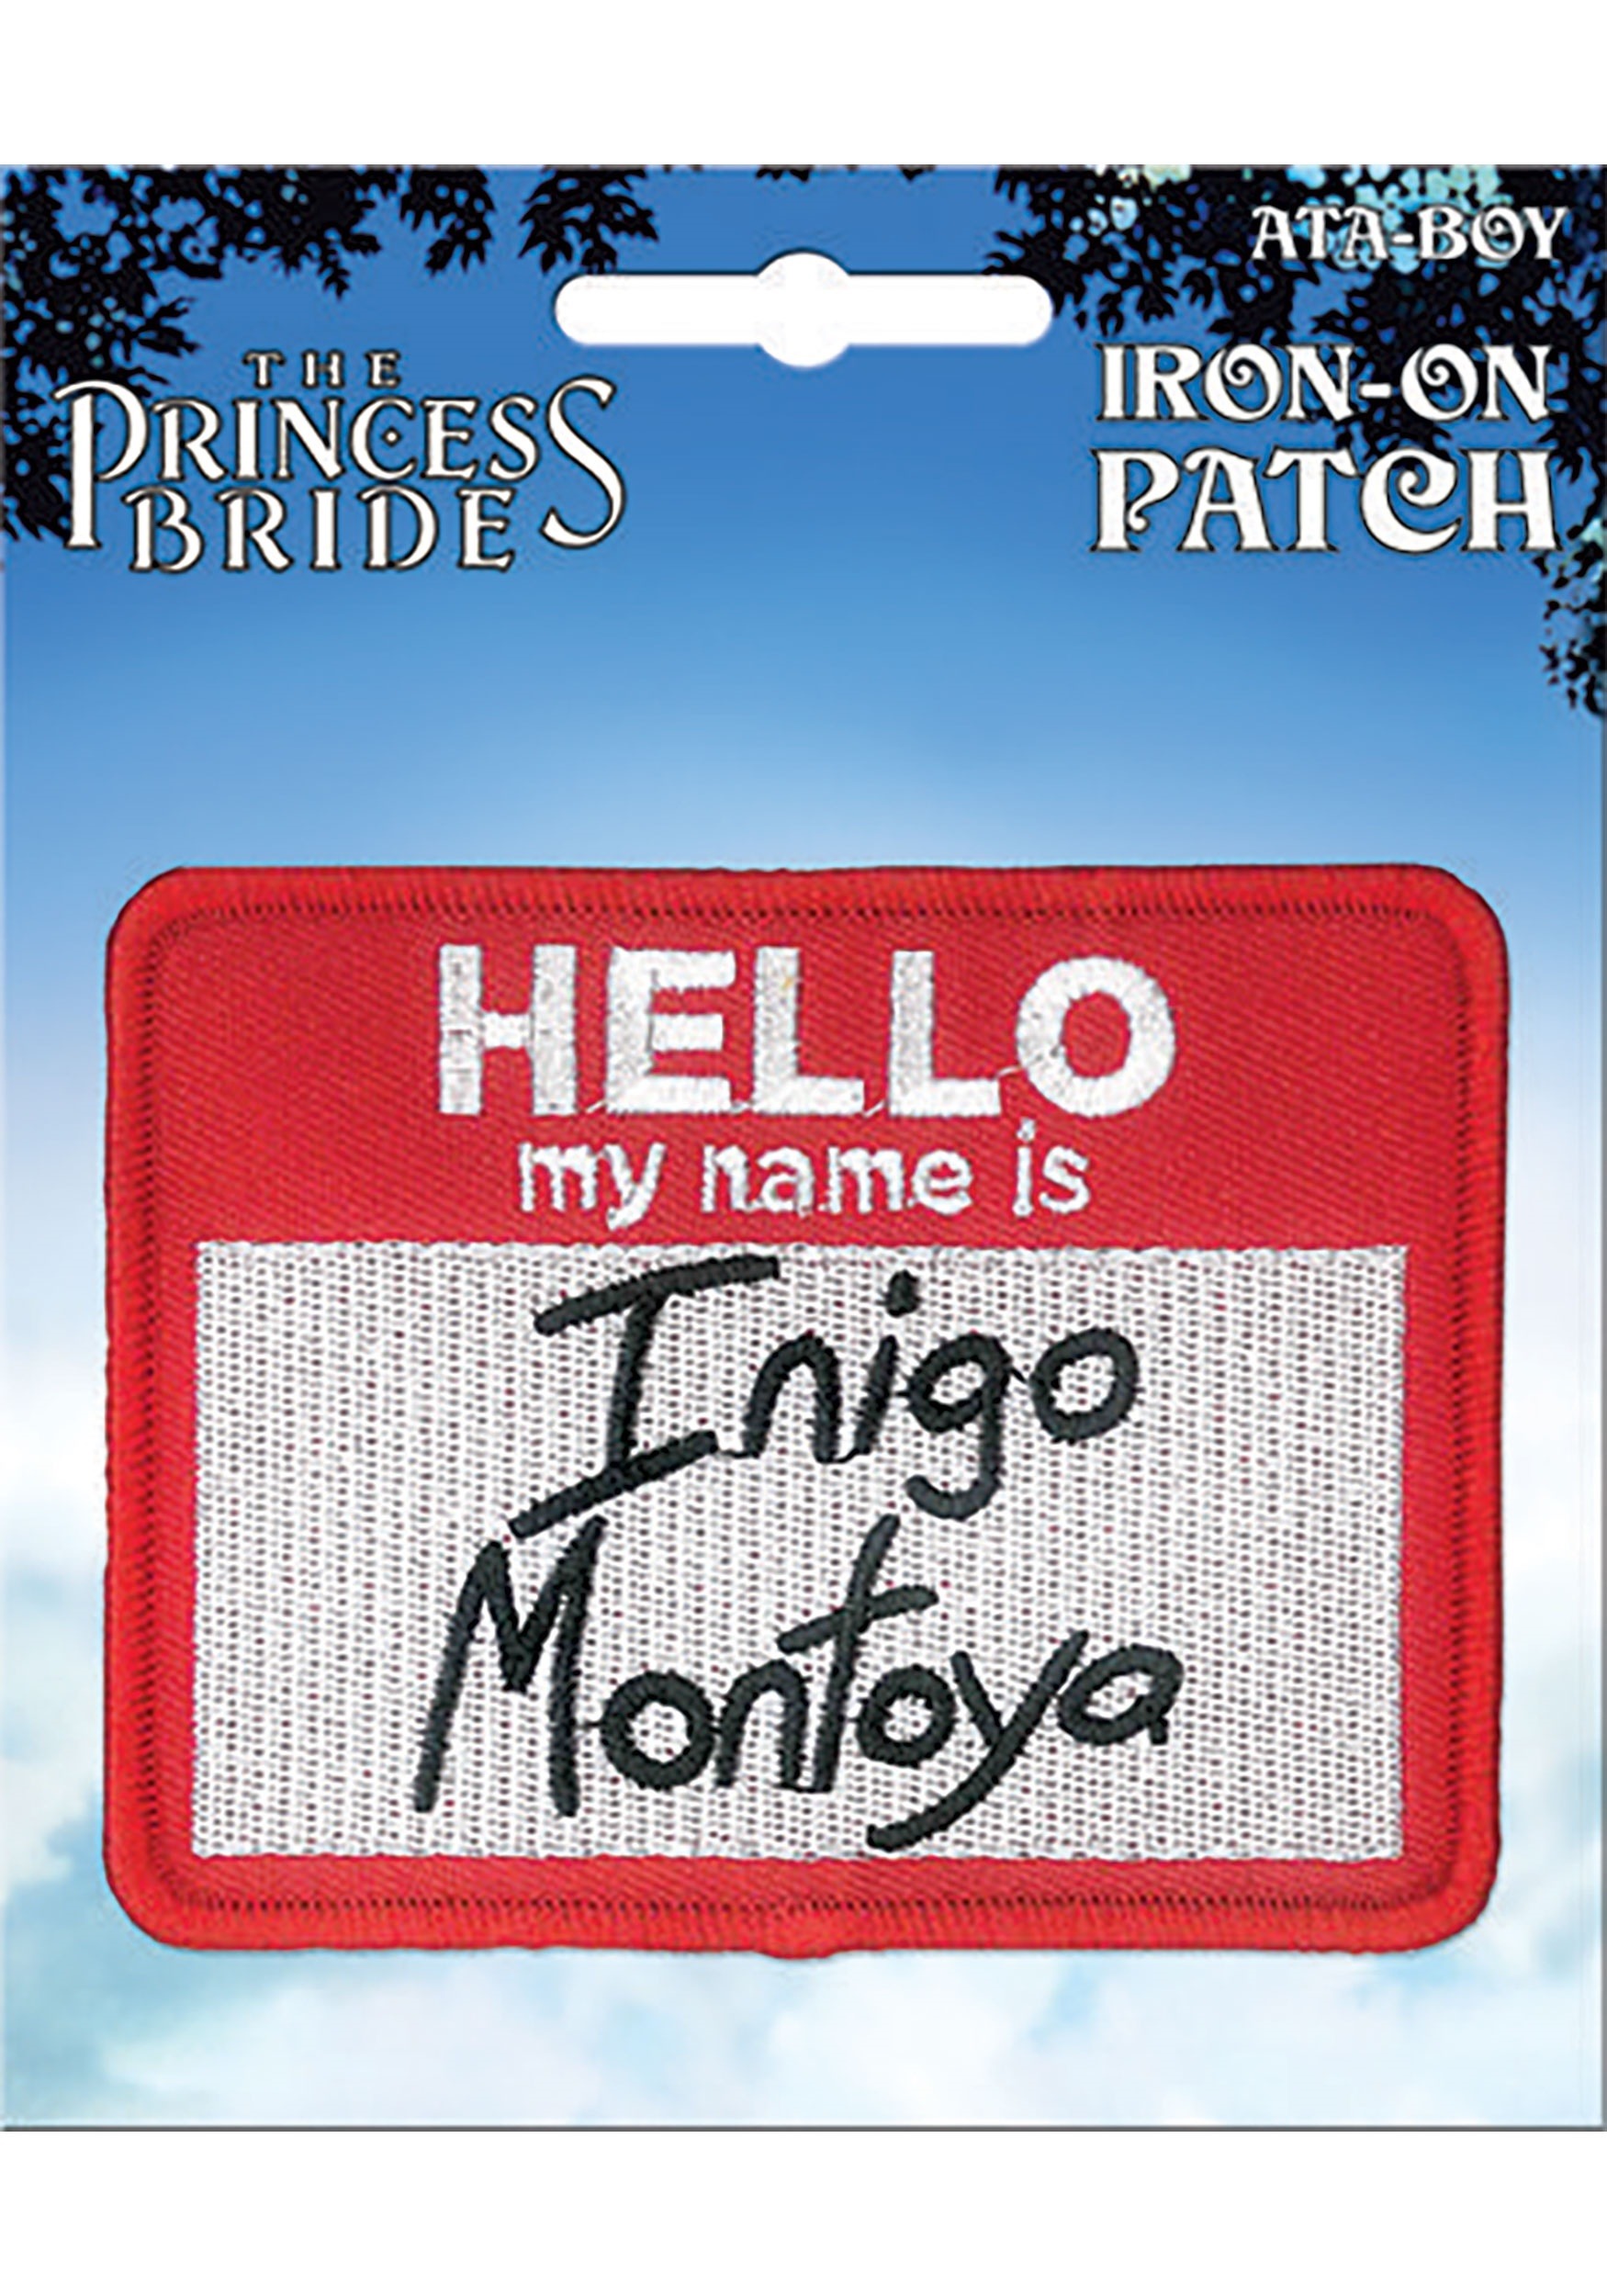 The Princess Bride Inigo Montoya Iron-On Patch by ATA-BOY